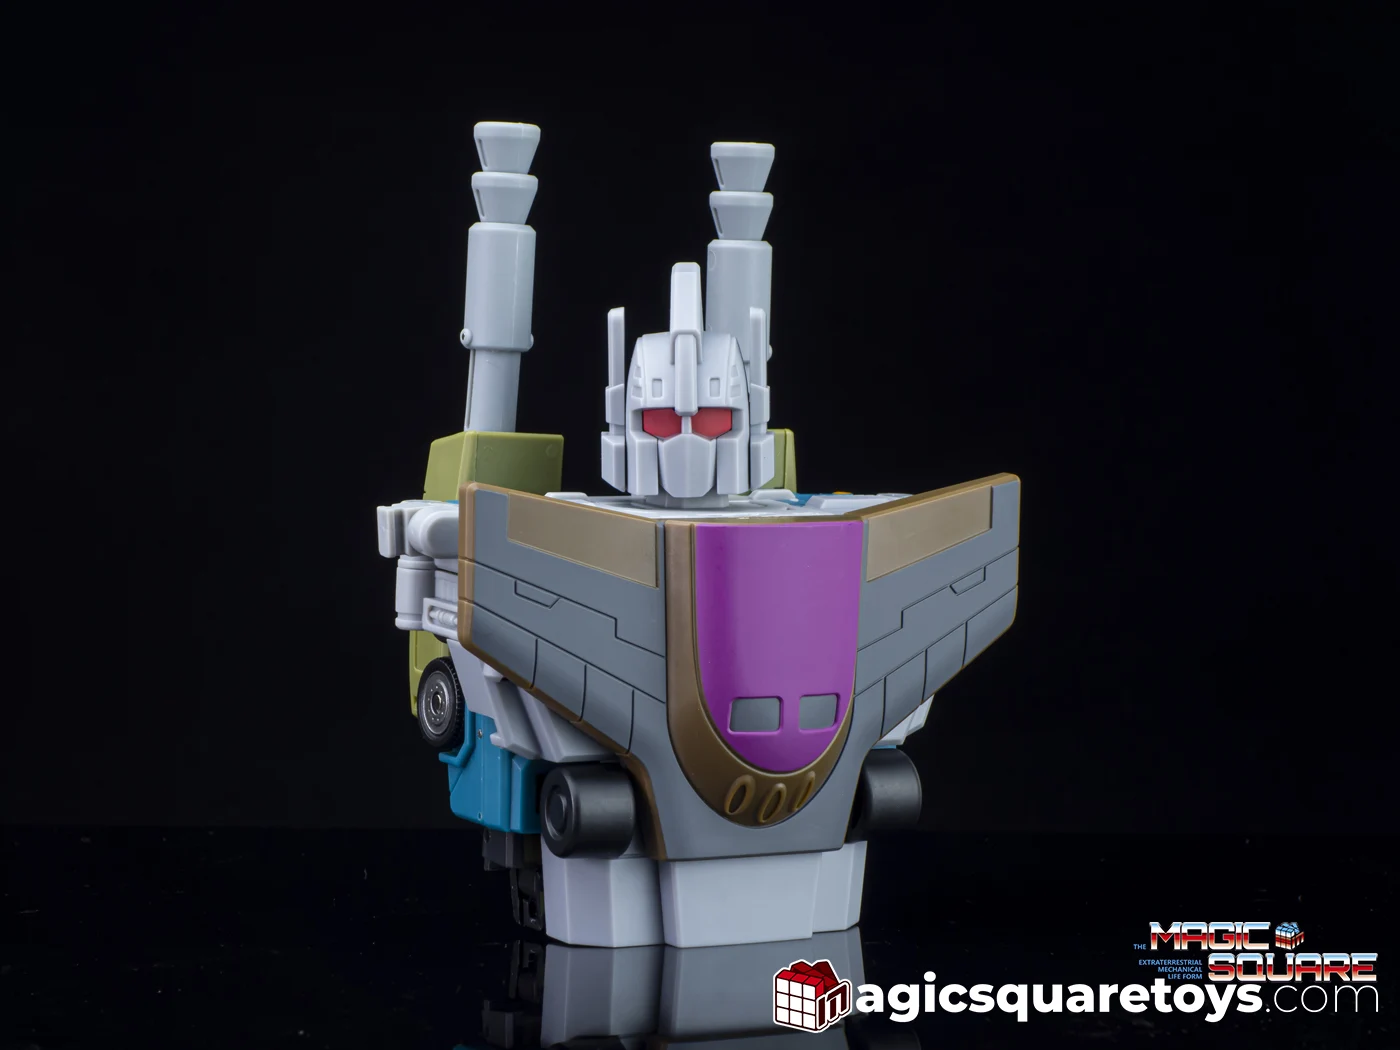 Magic Square Toys MS-B54 Tornado, Transformers Vortex homage, 4th member of the Bruticus homage.